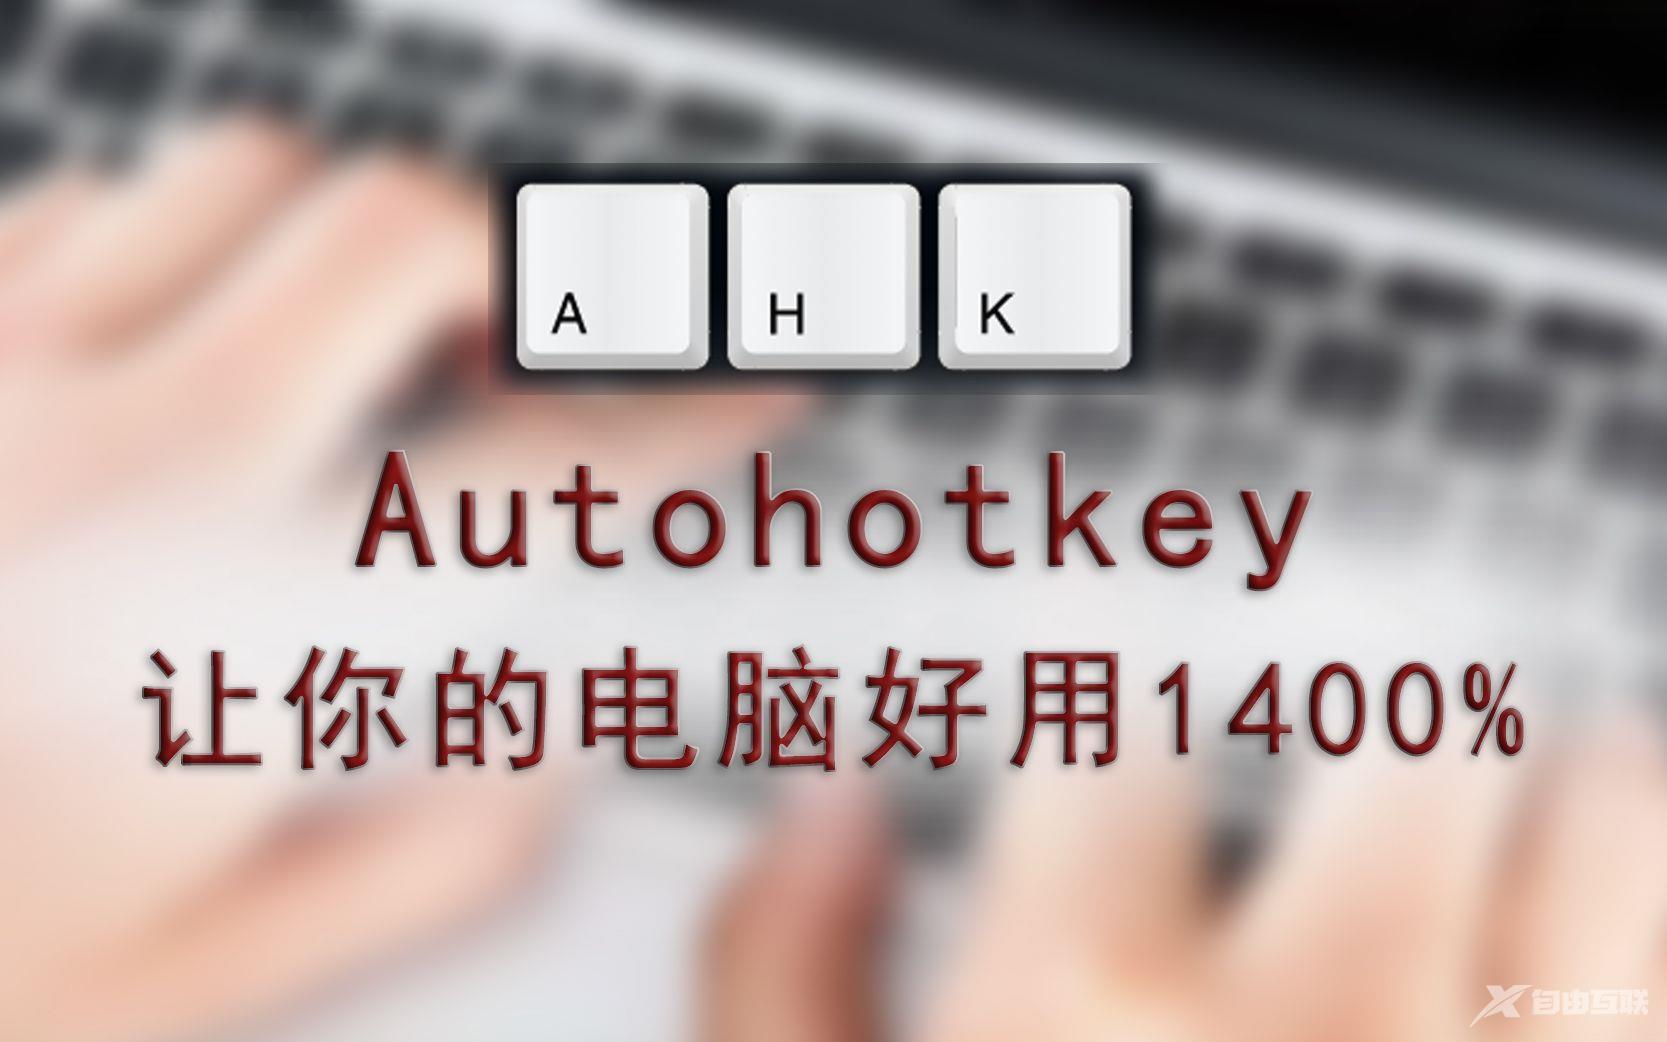 《AutoHotkey》打开程序及网页教程